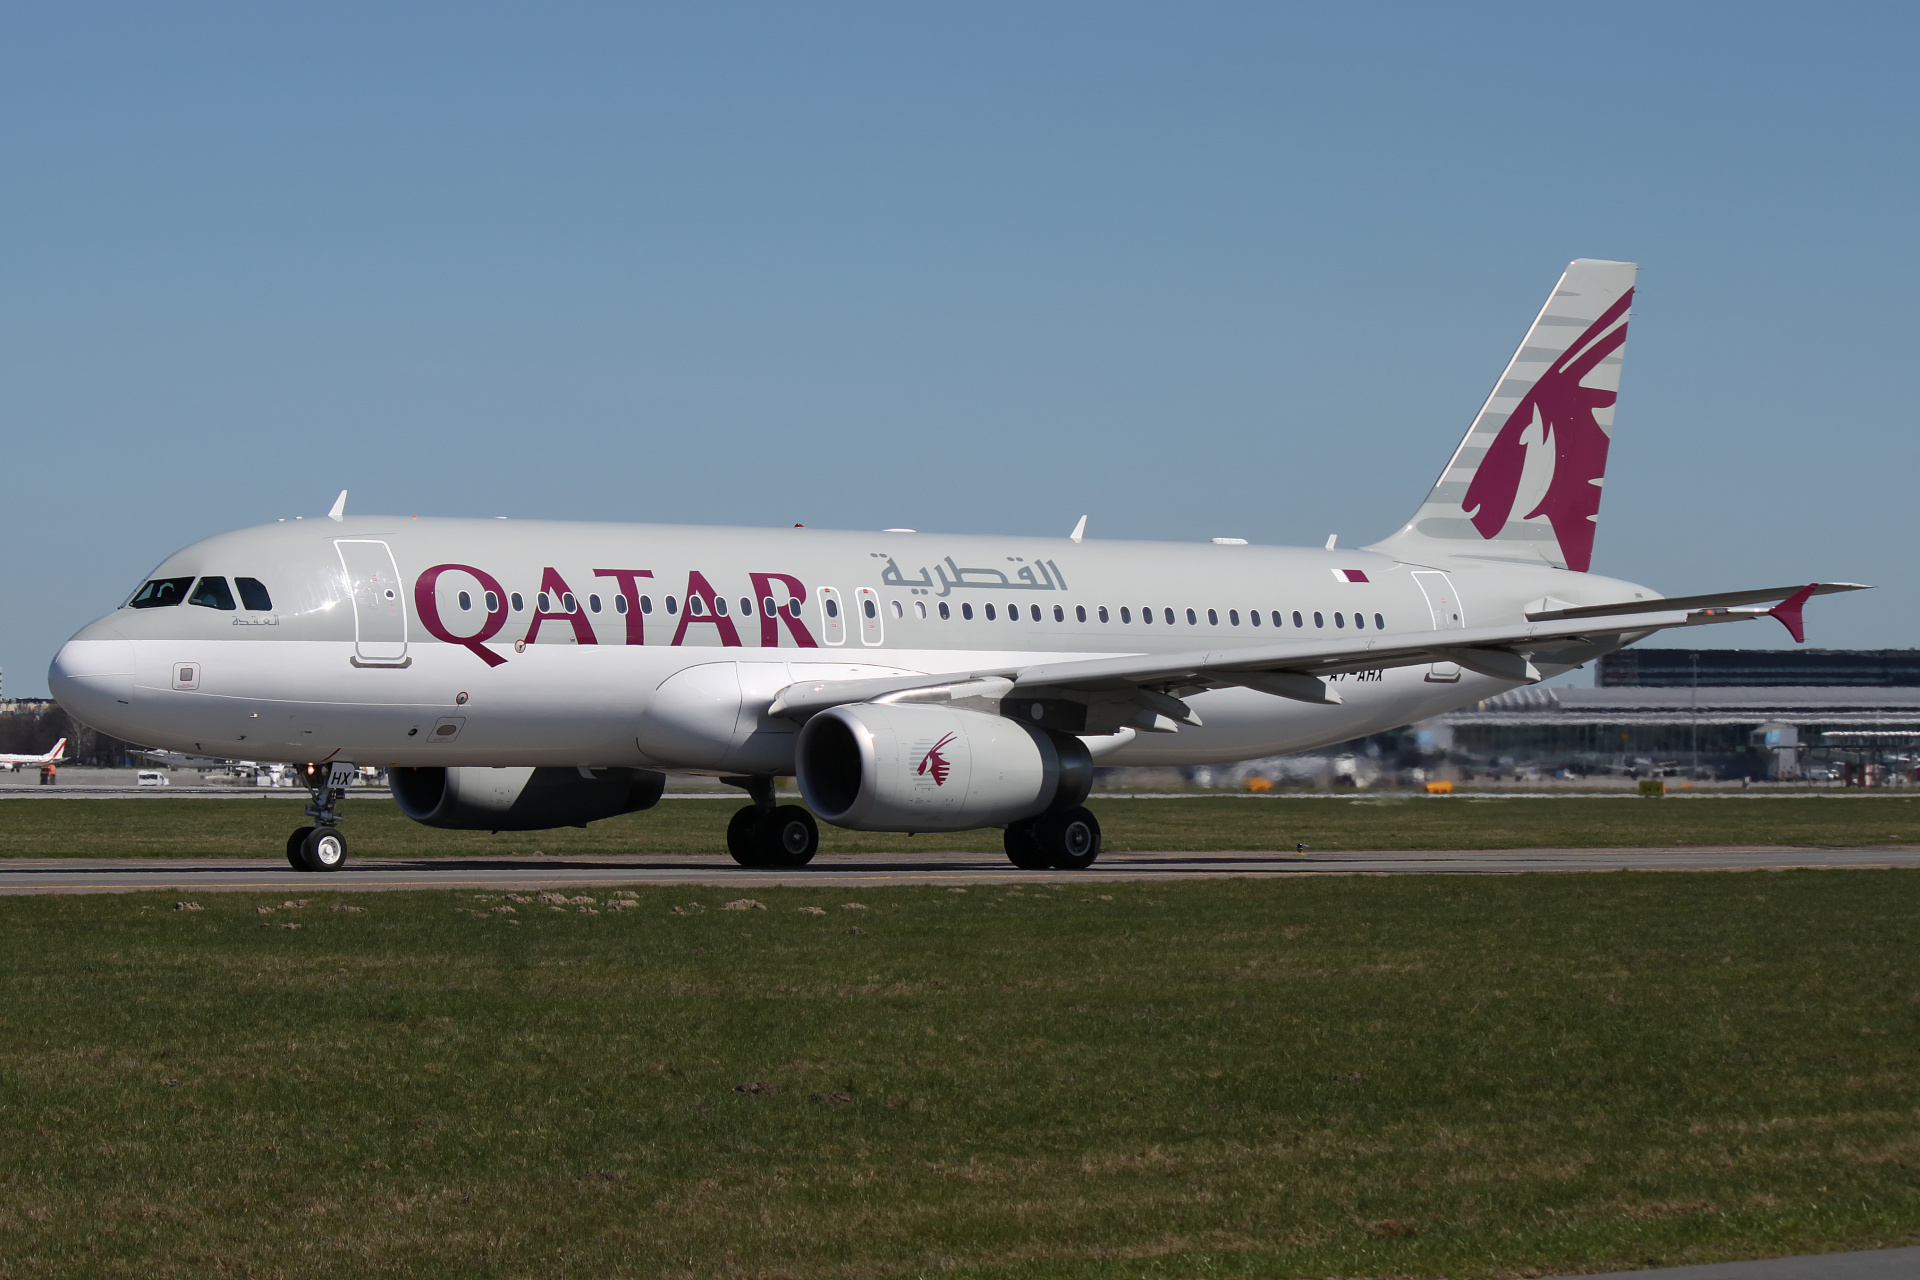 A7-AHX (Aircraft » EPWA Spotting » Airbus A320-200 » Qatar Airways)